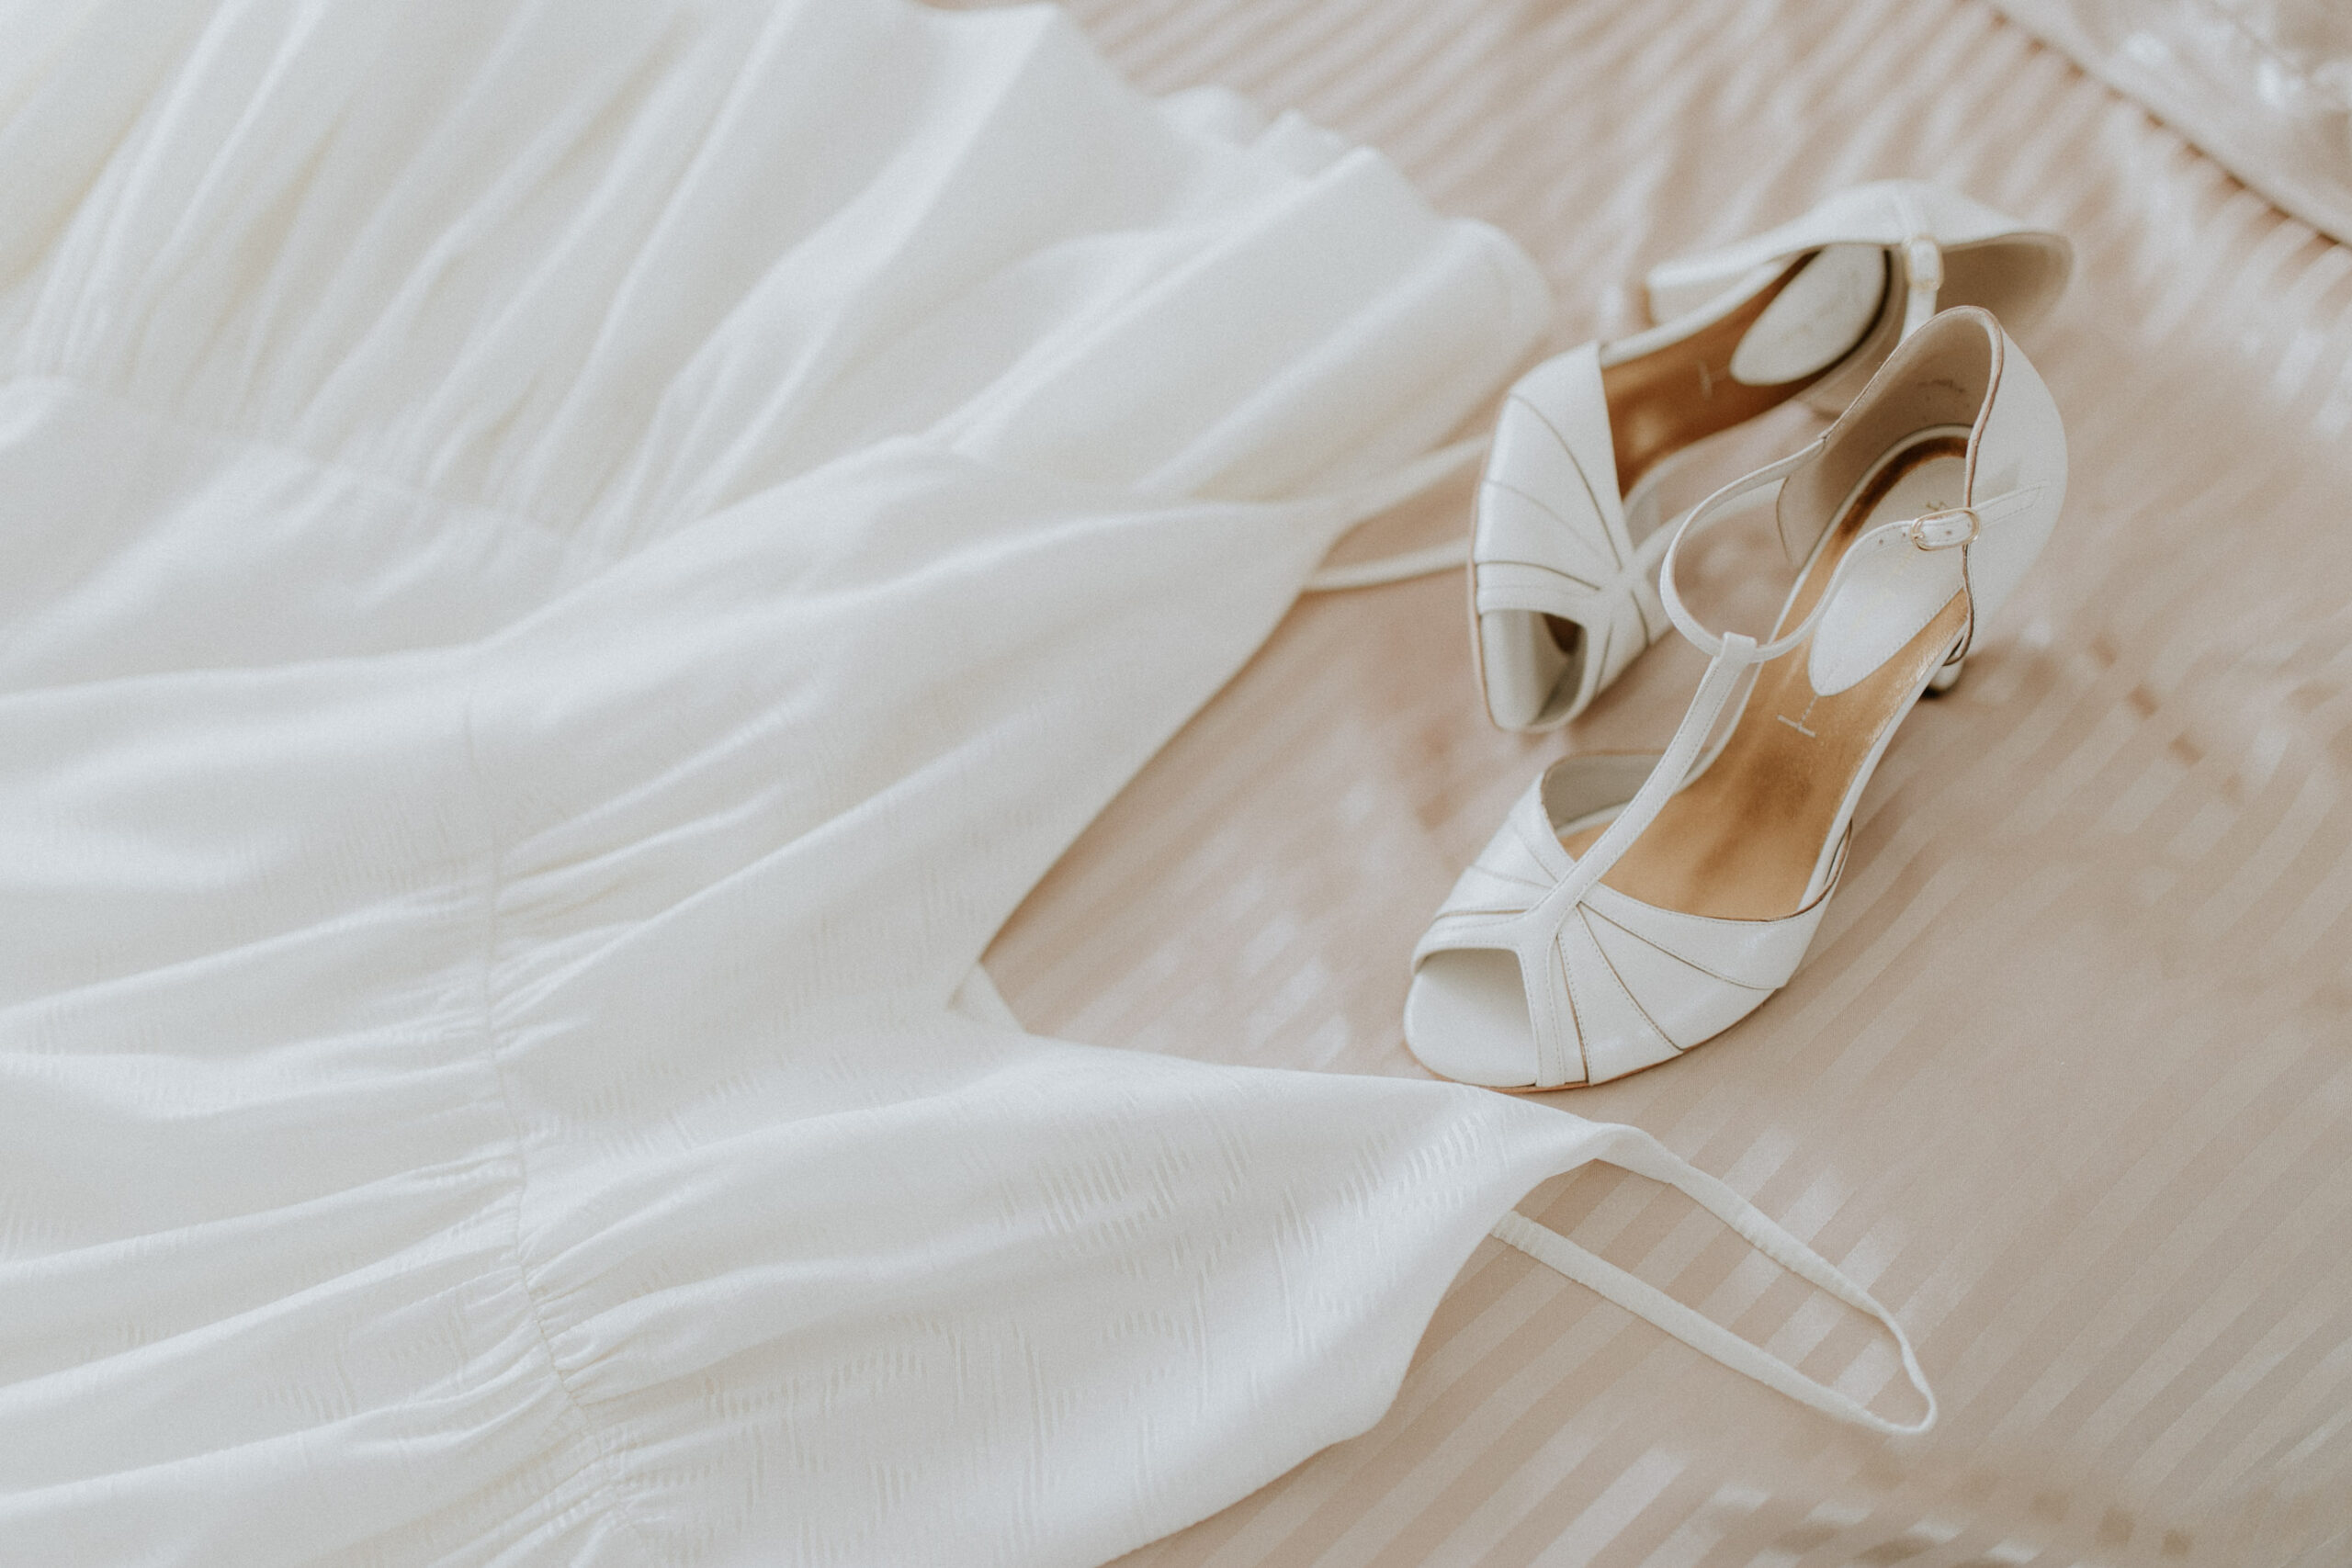 Karine Britto | Fotografia Minimalista | Casamentos Diurnos & Mini Weddings